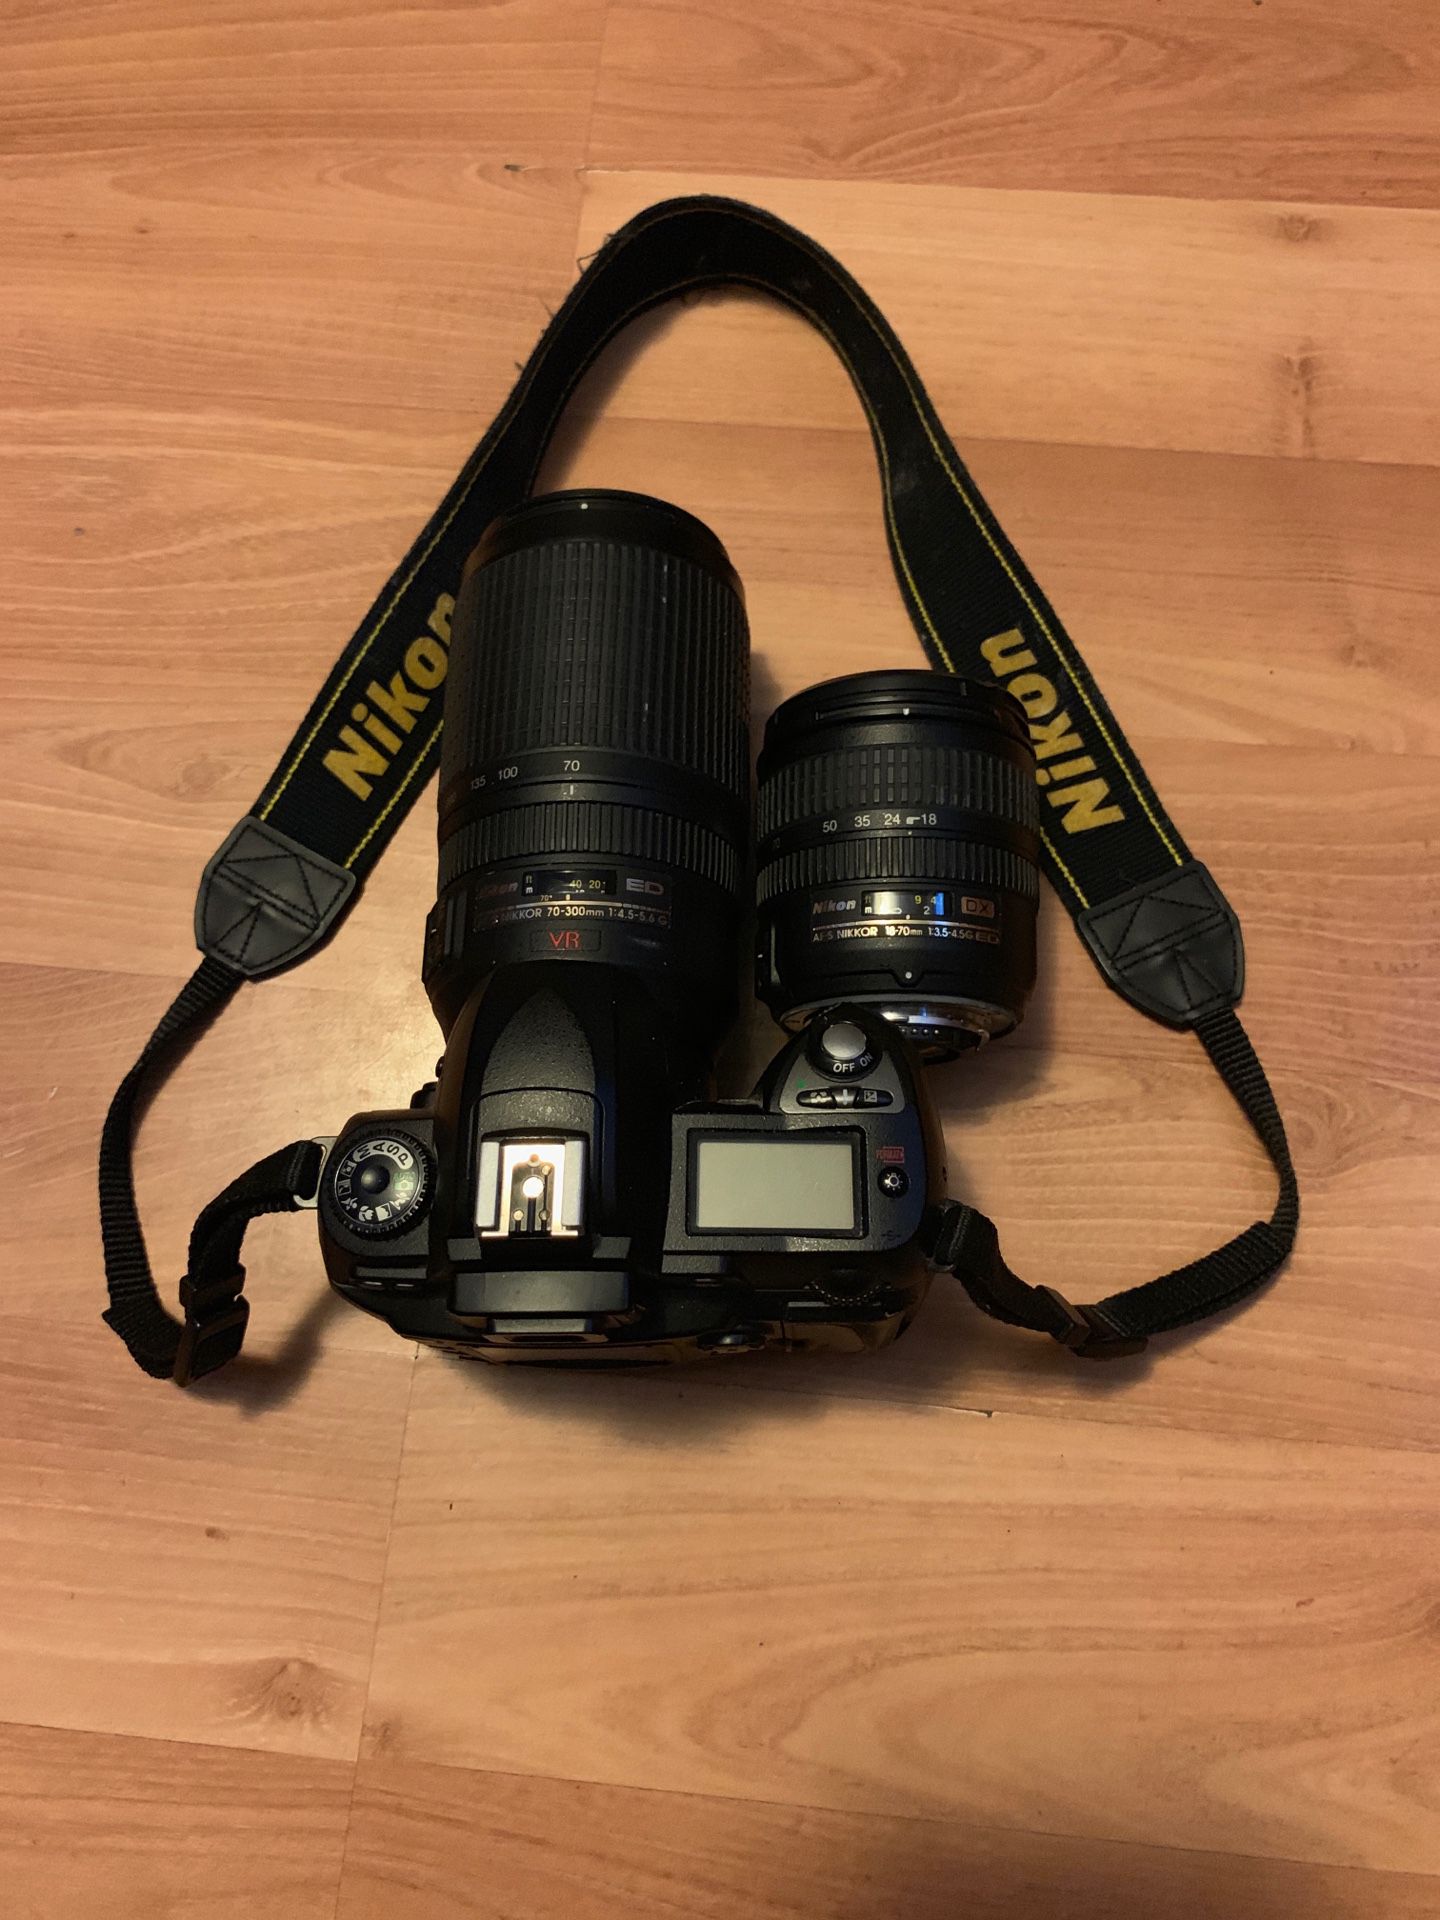 Nikon D70 with 2 lenses